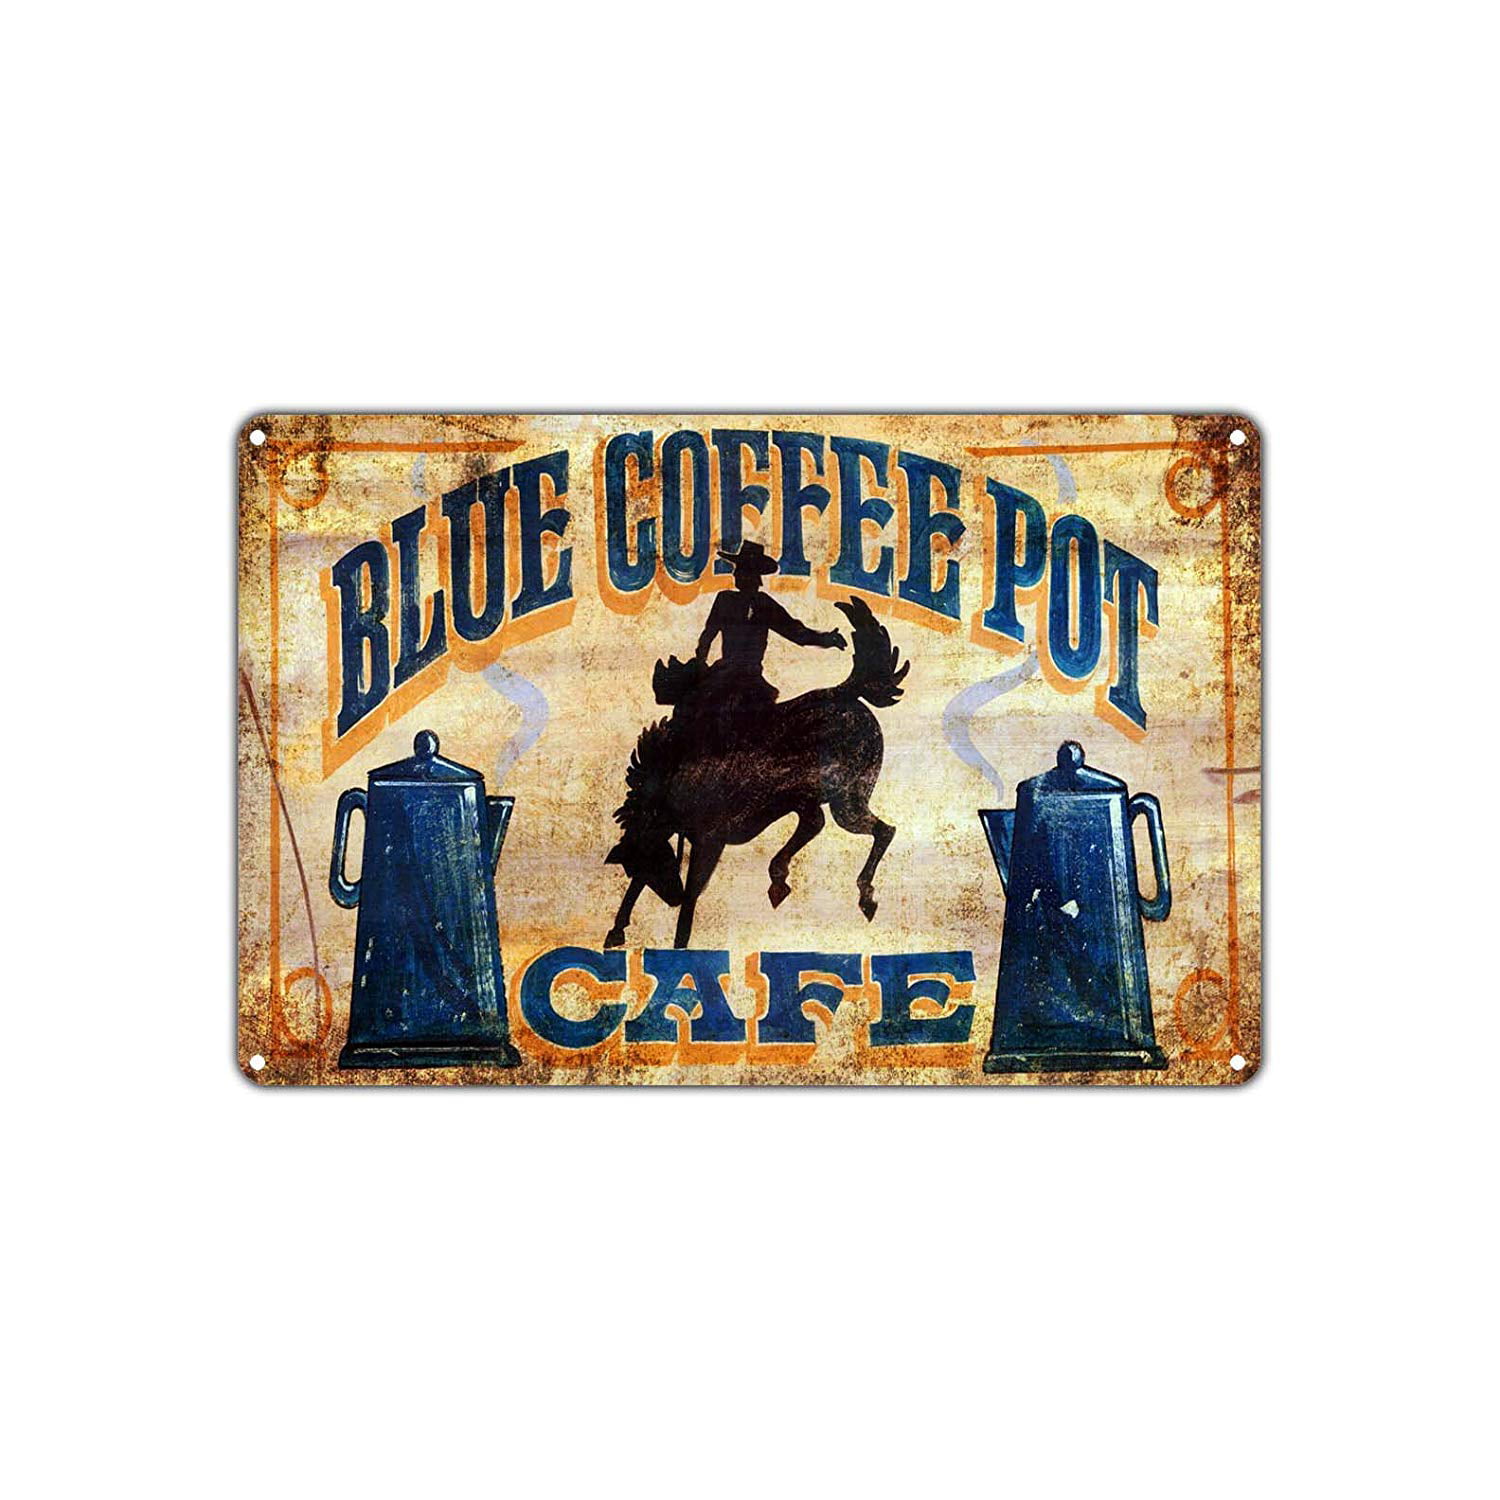 Blue Coffee Pot Cafe Tea Decor Art Shop Man Cave Bar Vintage Retro Metal Sign 